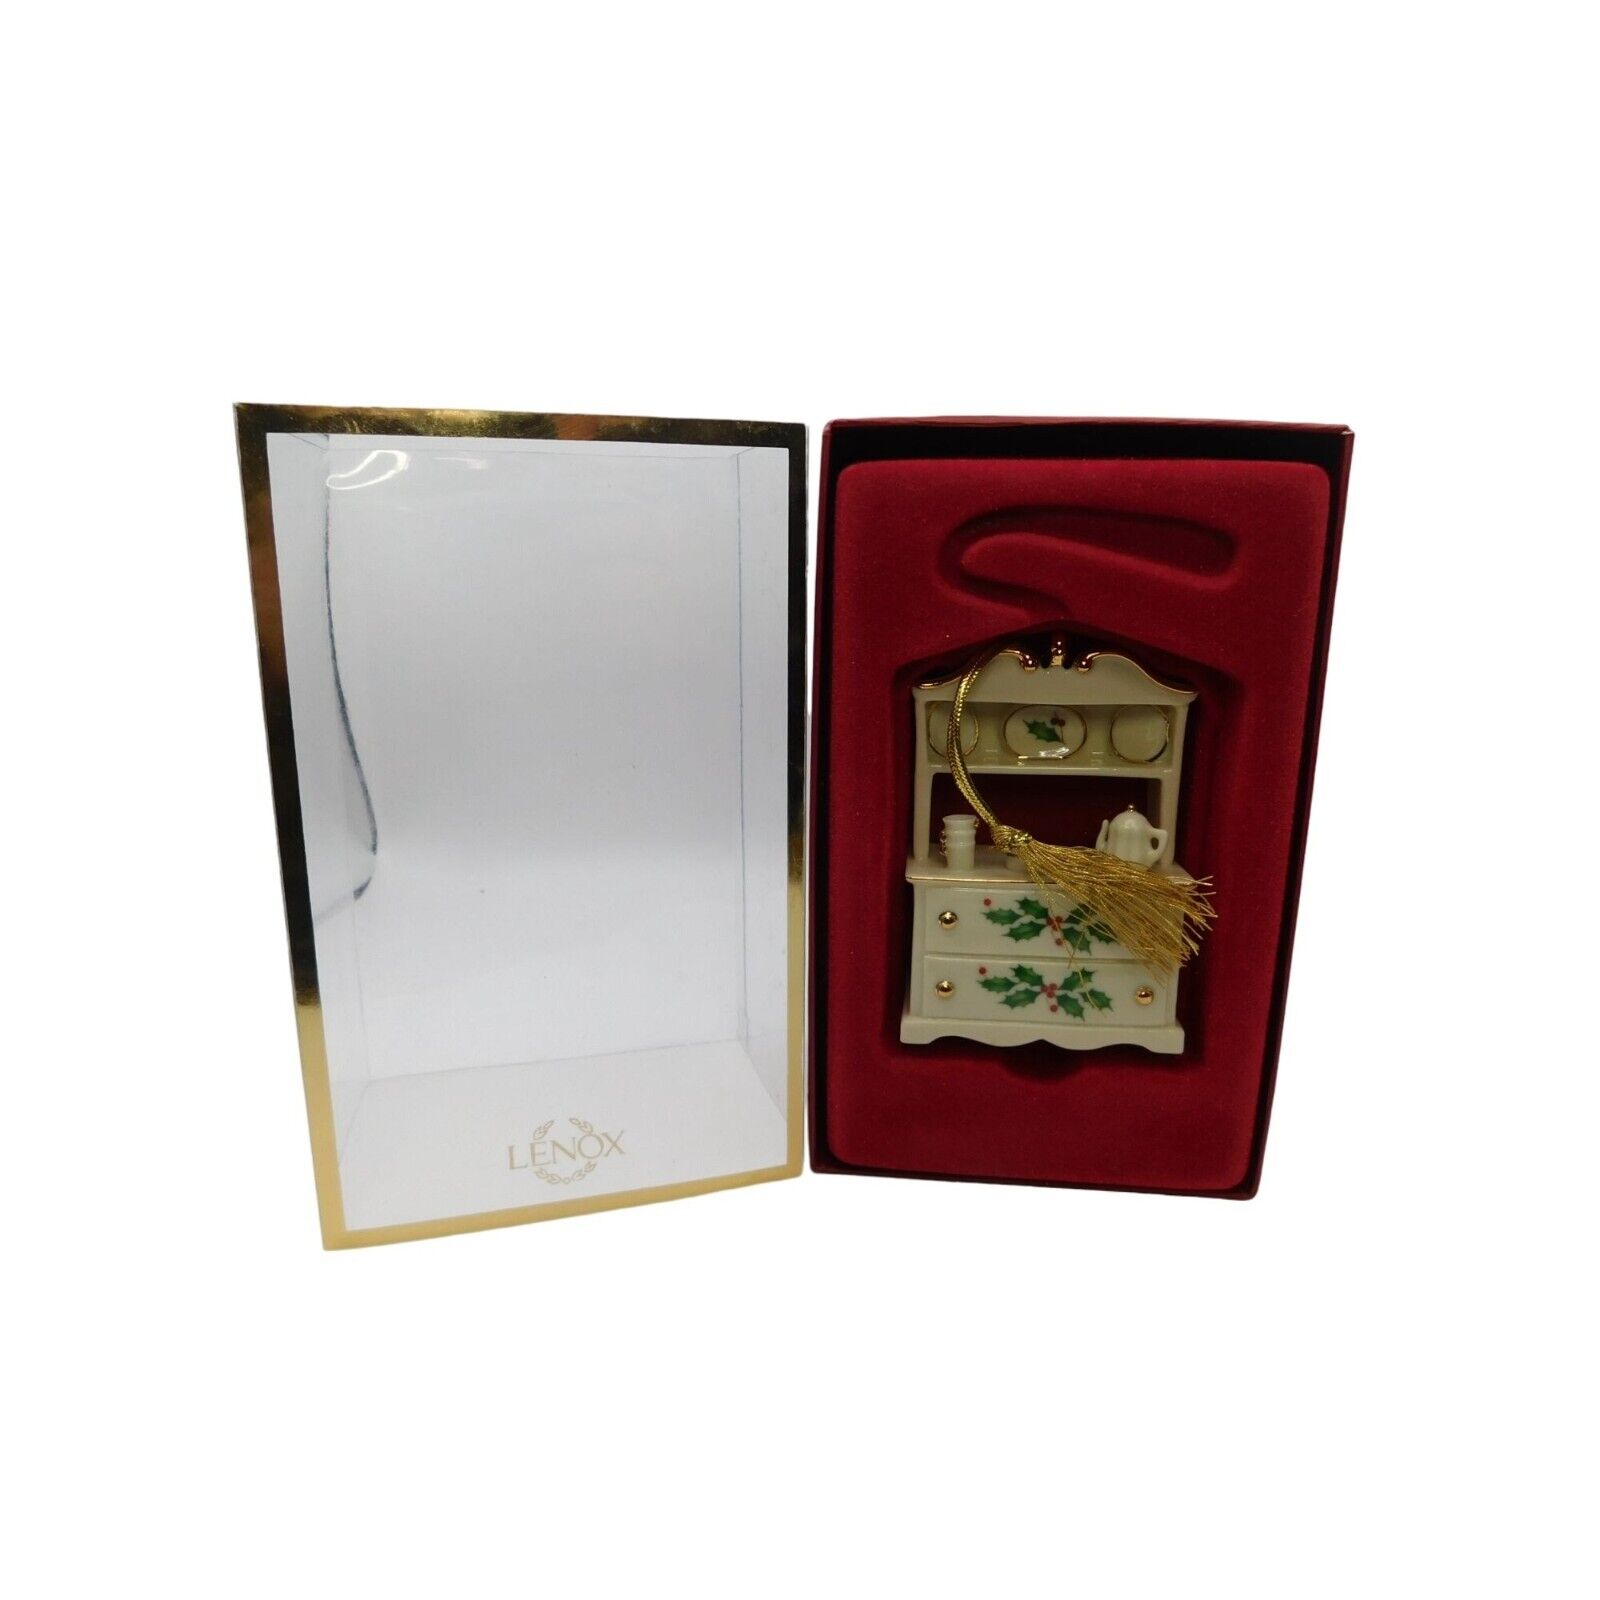 Lenox Holiday Home Hutch Christmas Ornament W/Original Box 6119085